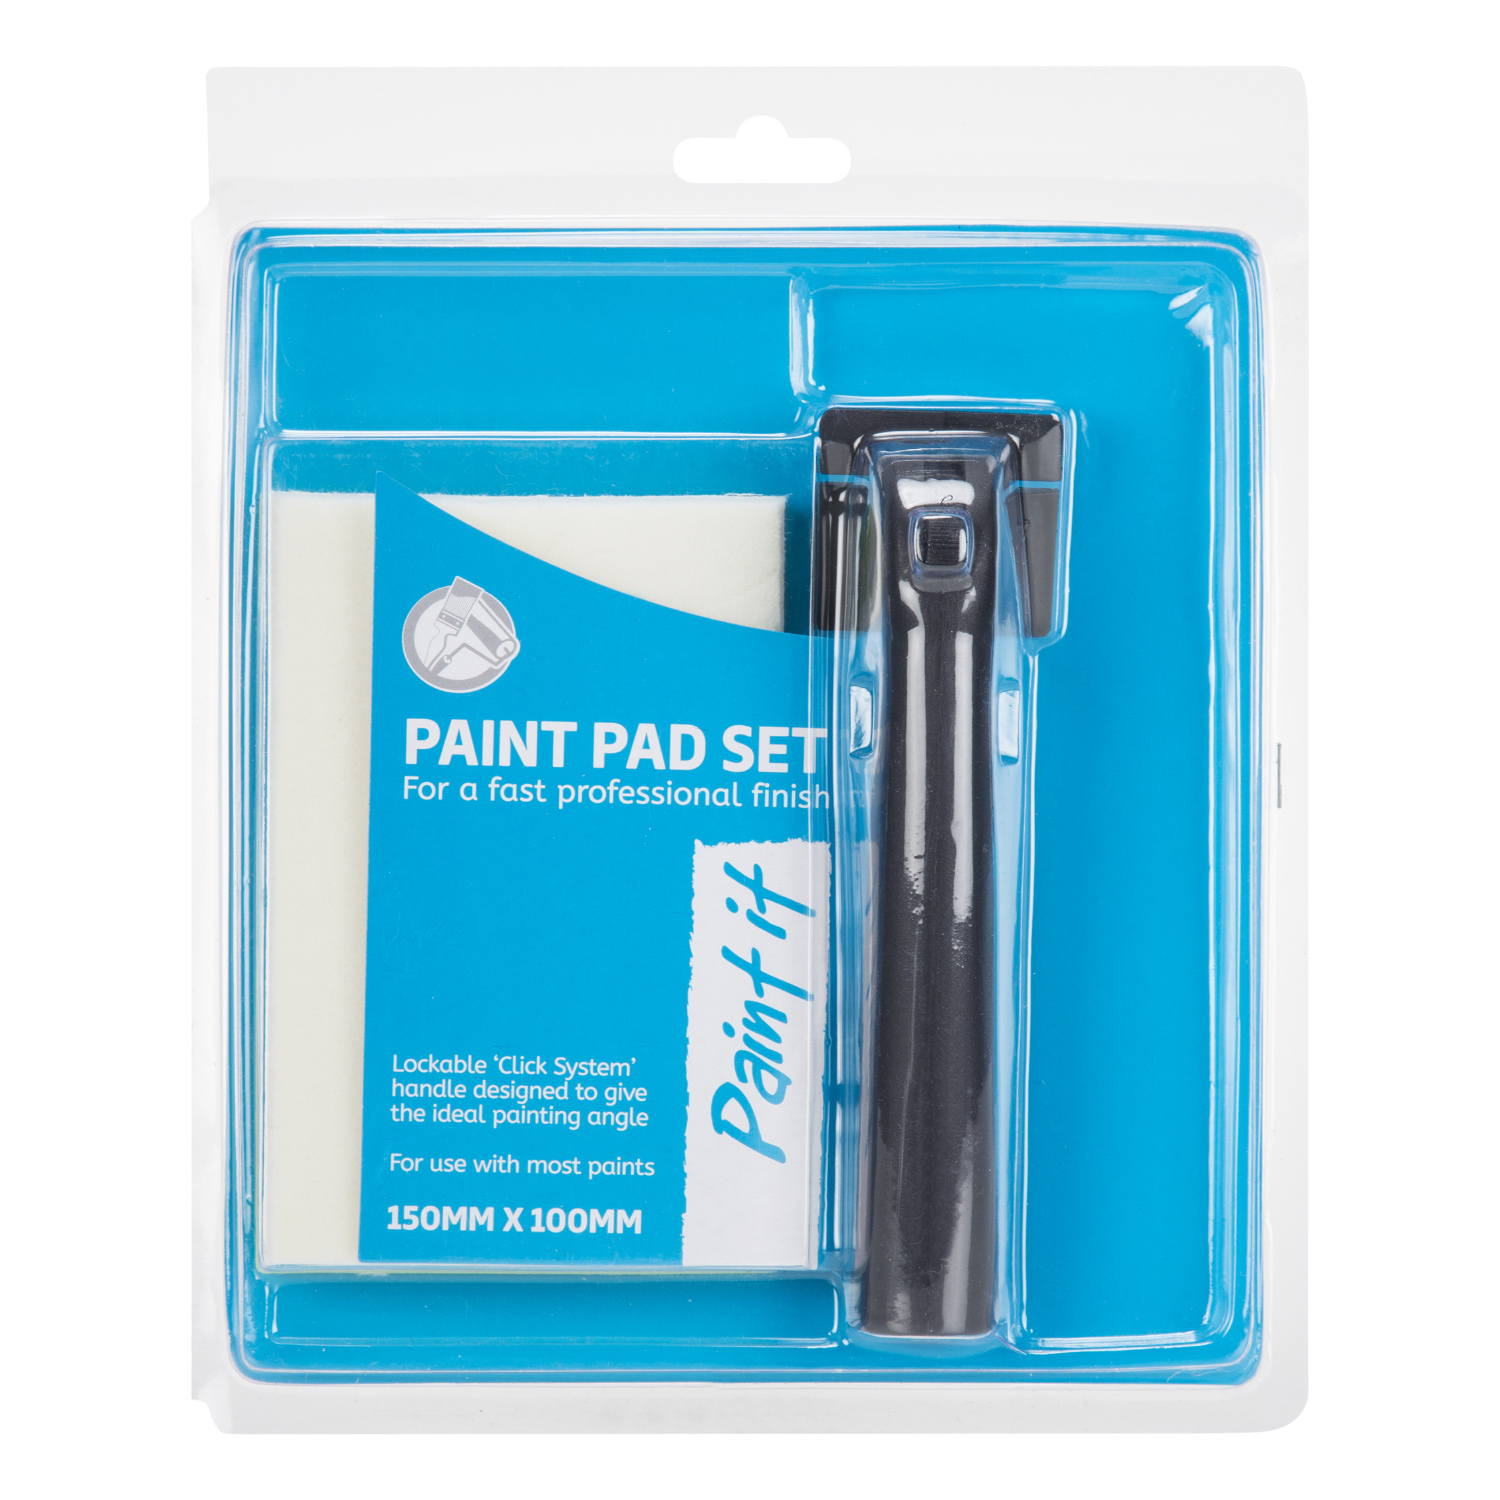 Prepare It Paint Pad Set Image